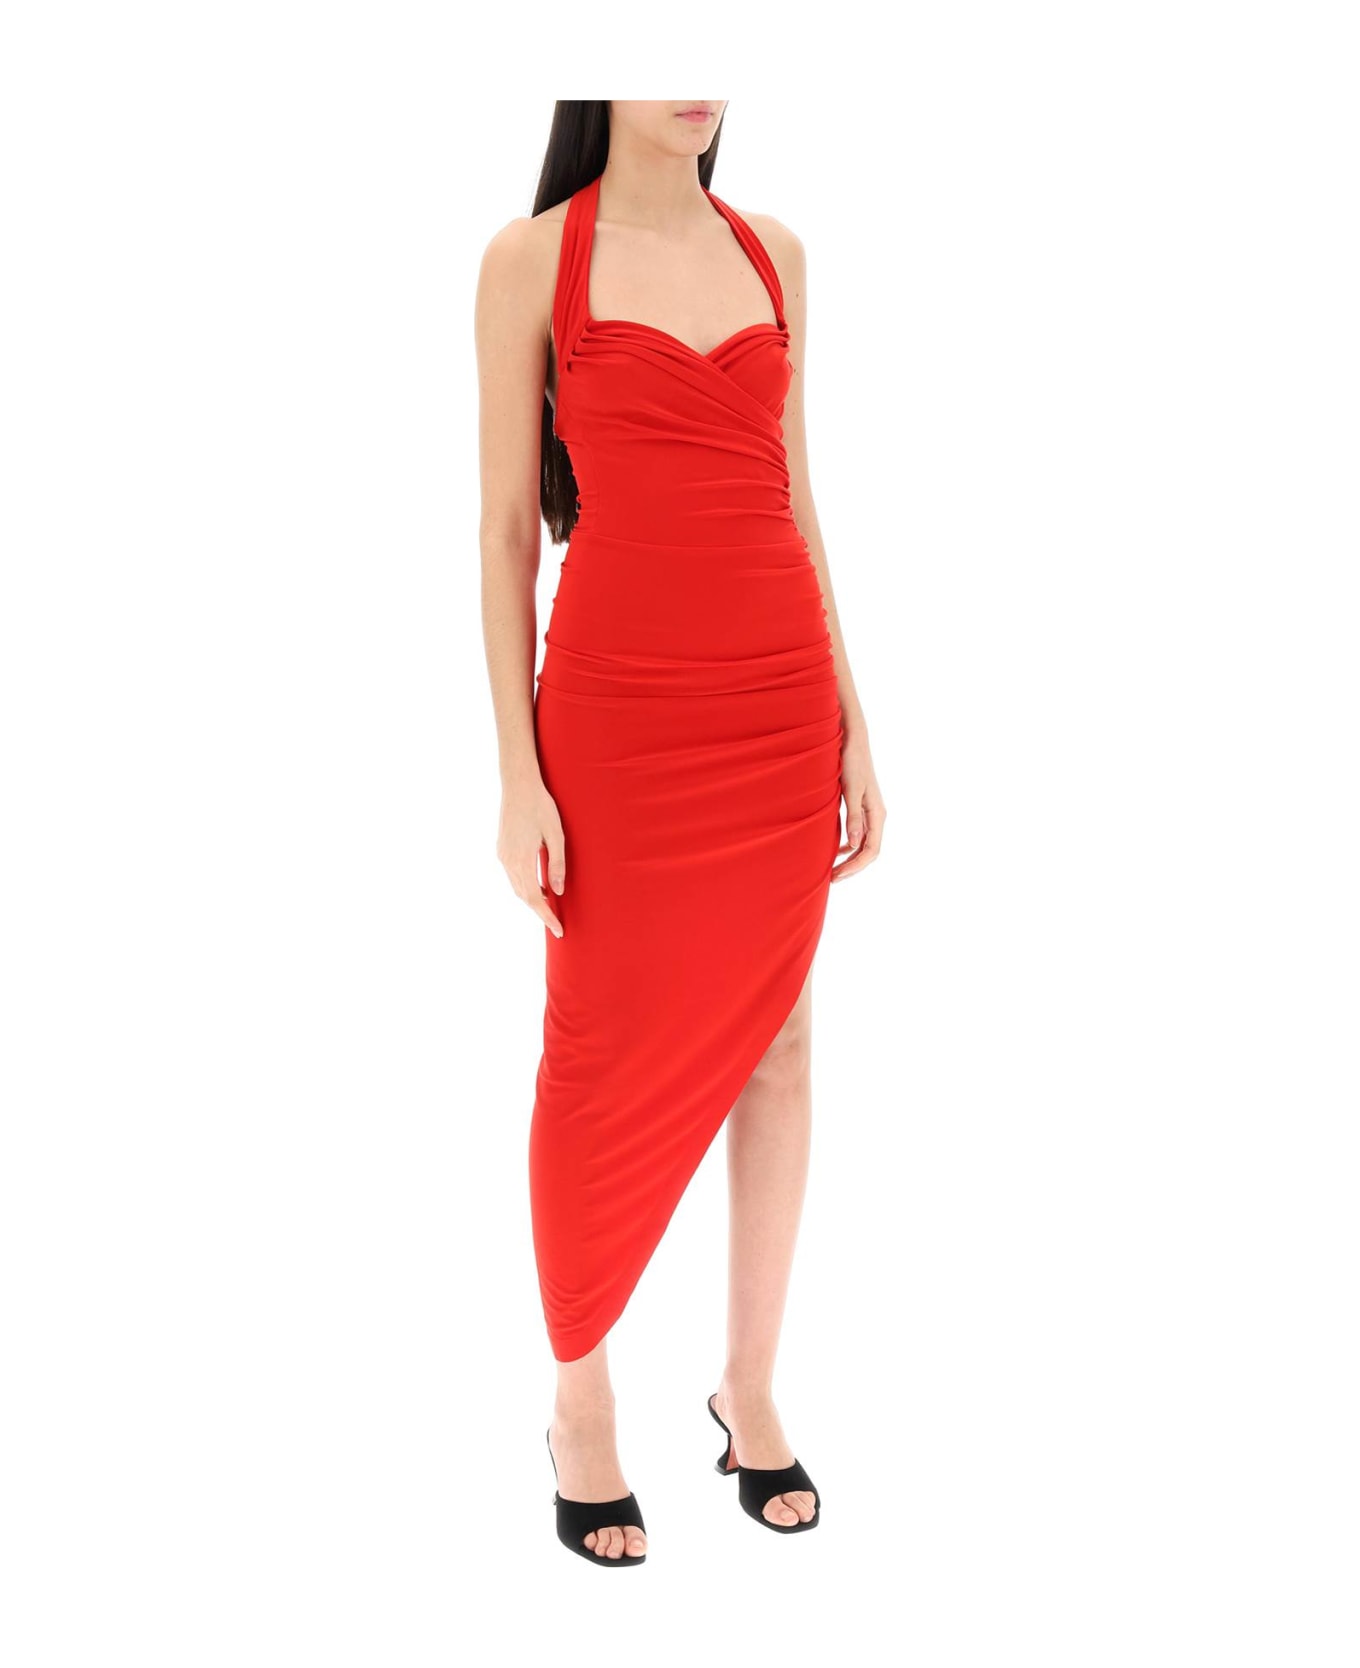 Norma Kamali Cayla Drape Dress - TIGER RED (Red)